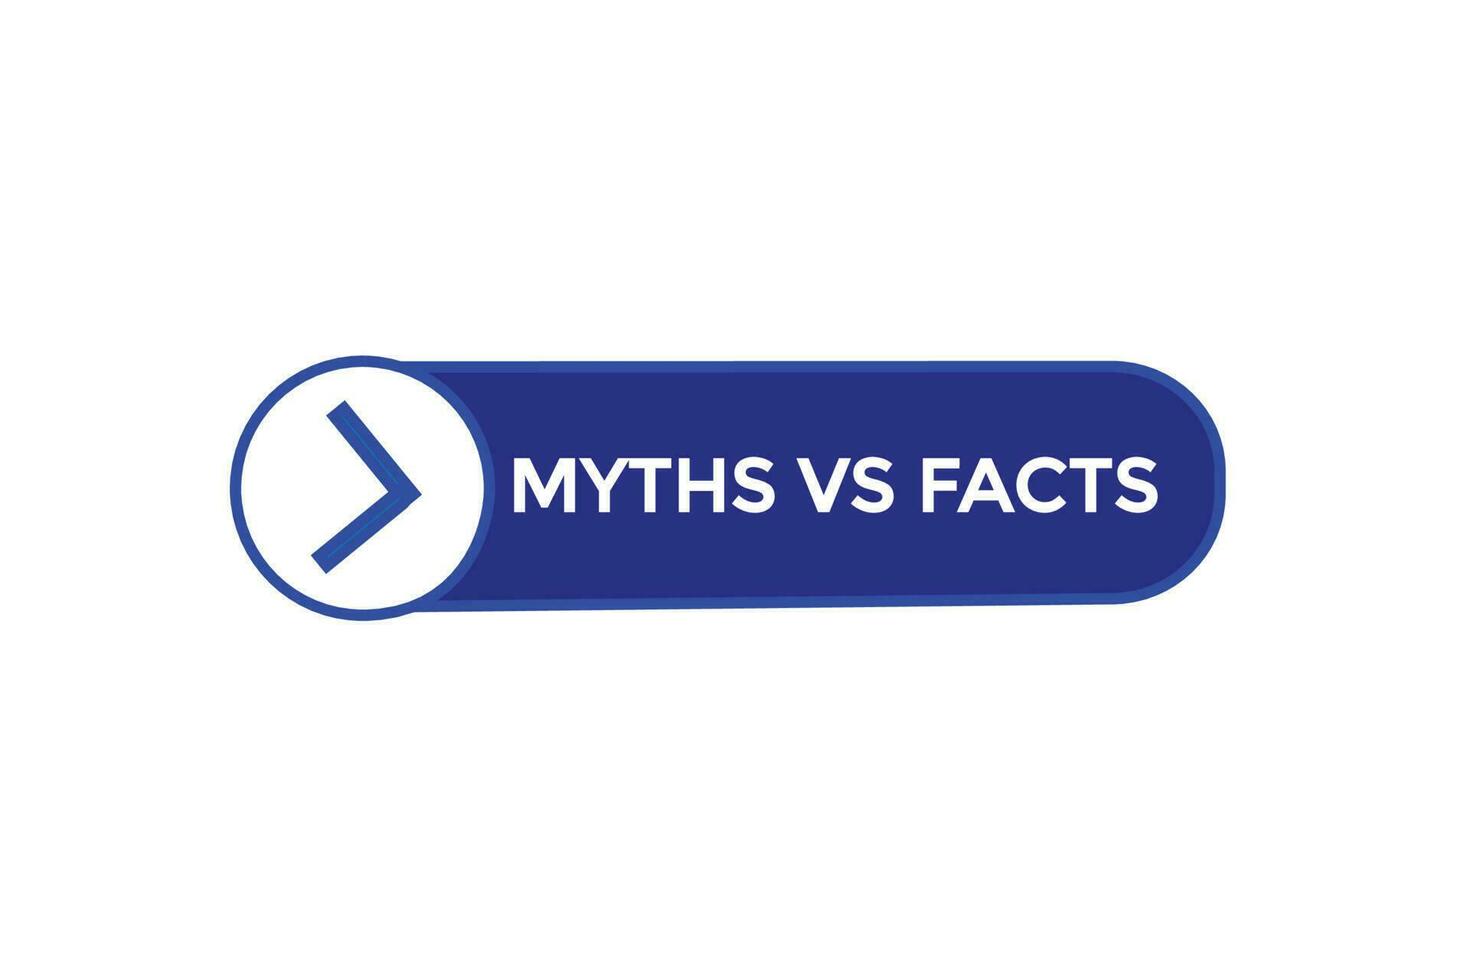 myths vs facts vectors.sign label bubble speech myths vs facts vector